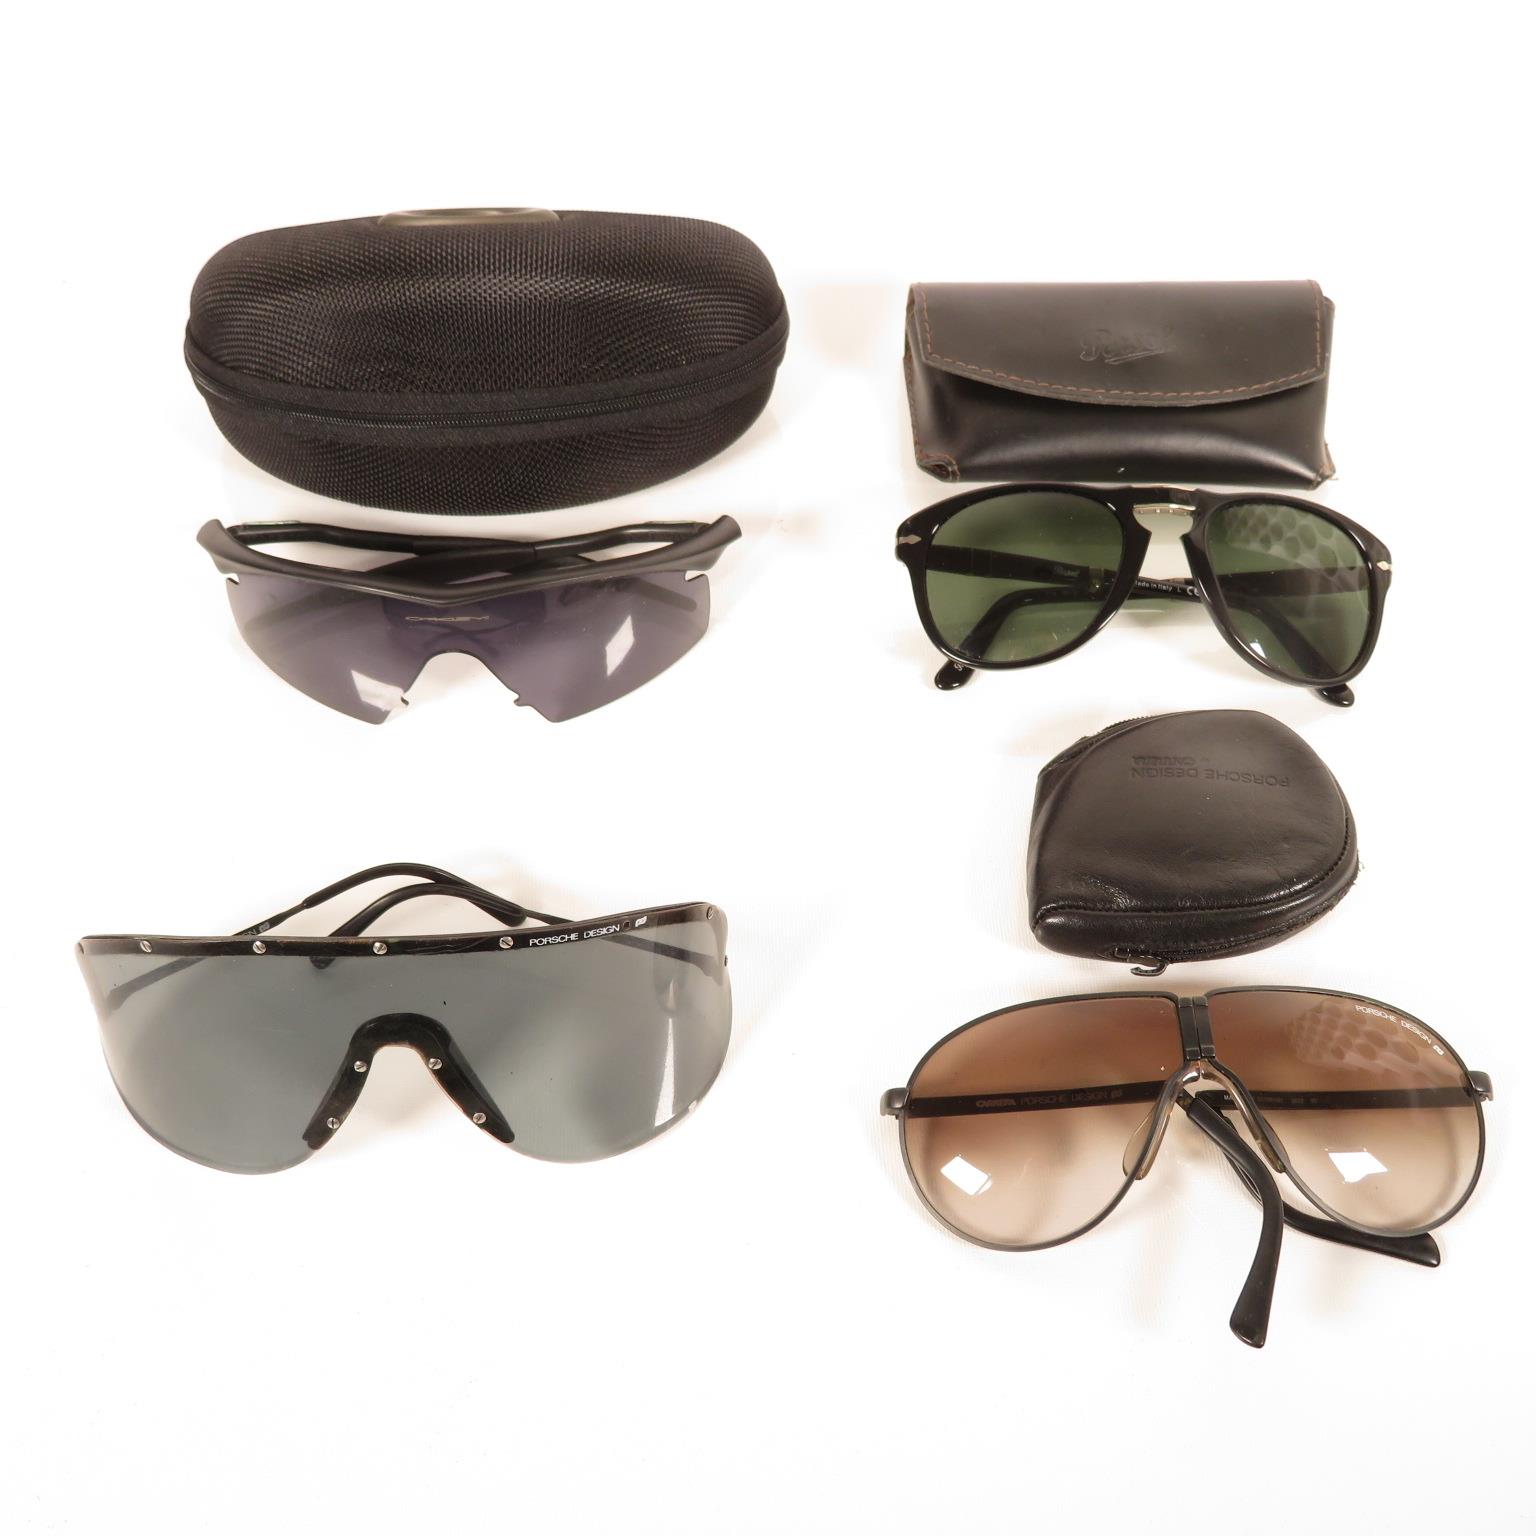 Pair of Porsche Folding Sunglasses, Per Sol folding Sunglasses, Oakley sunglasses and Porsche design